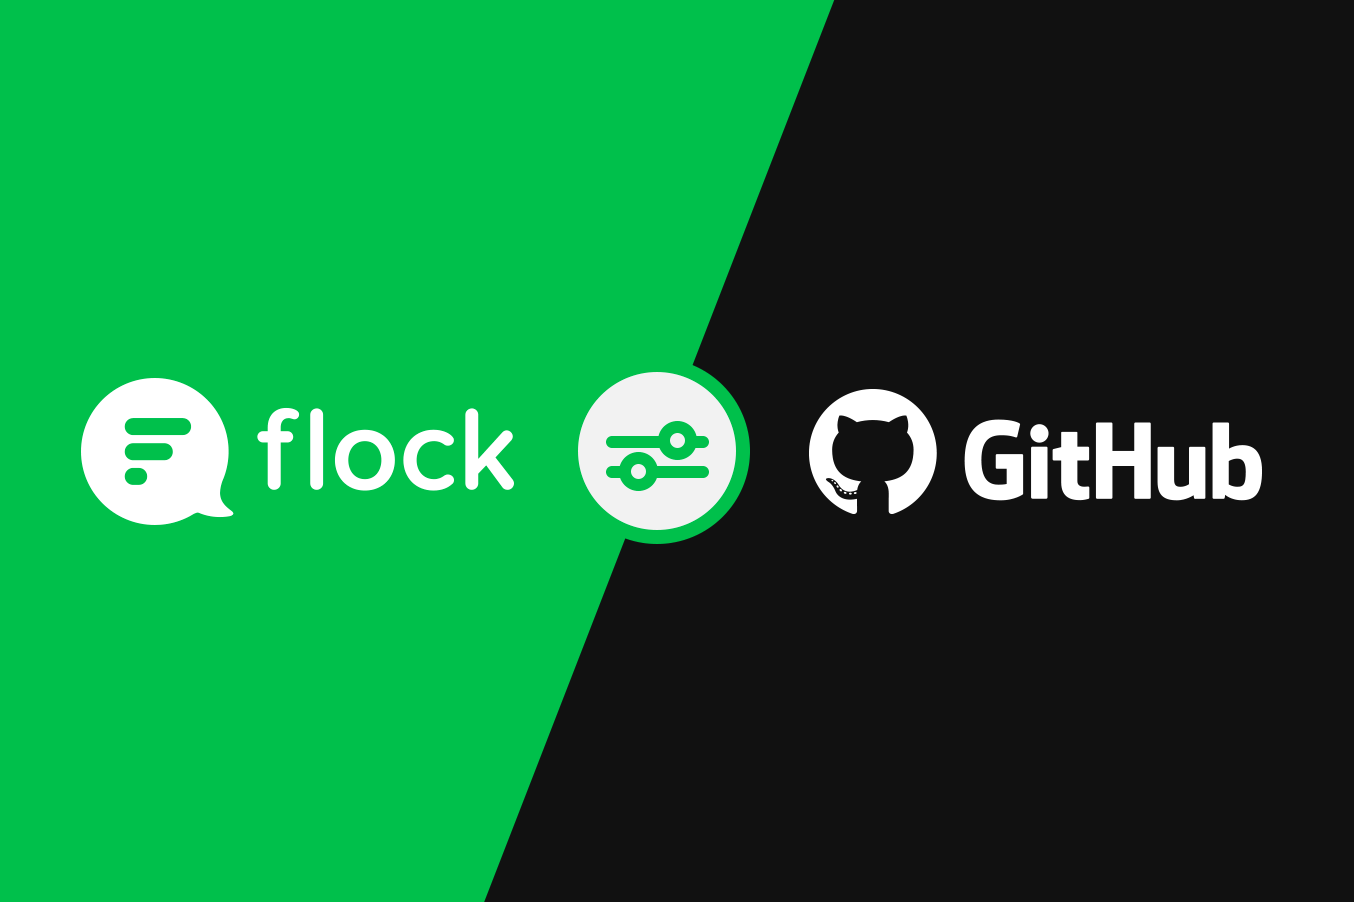 Graphic: Flock and Github logos